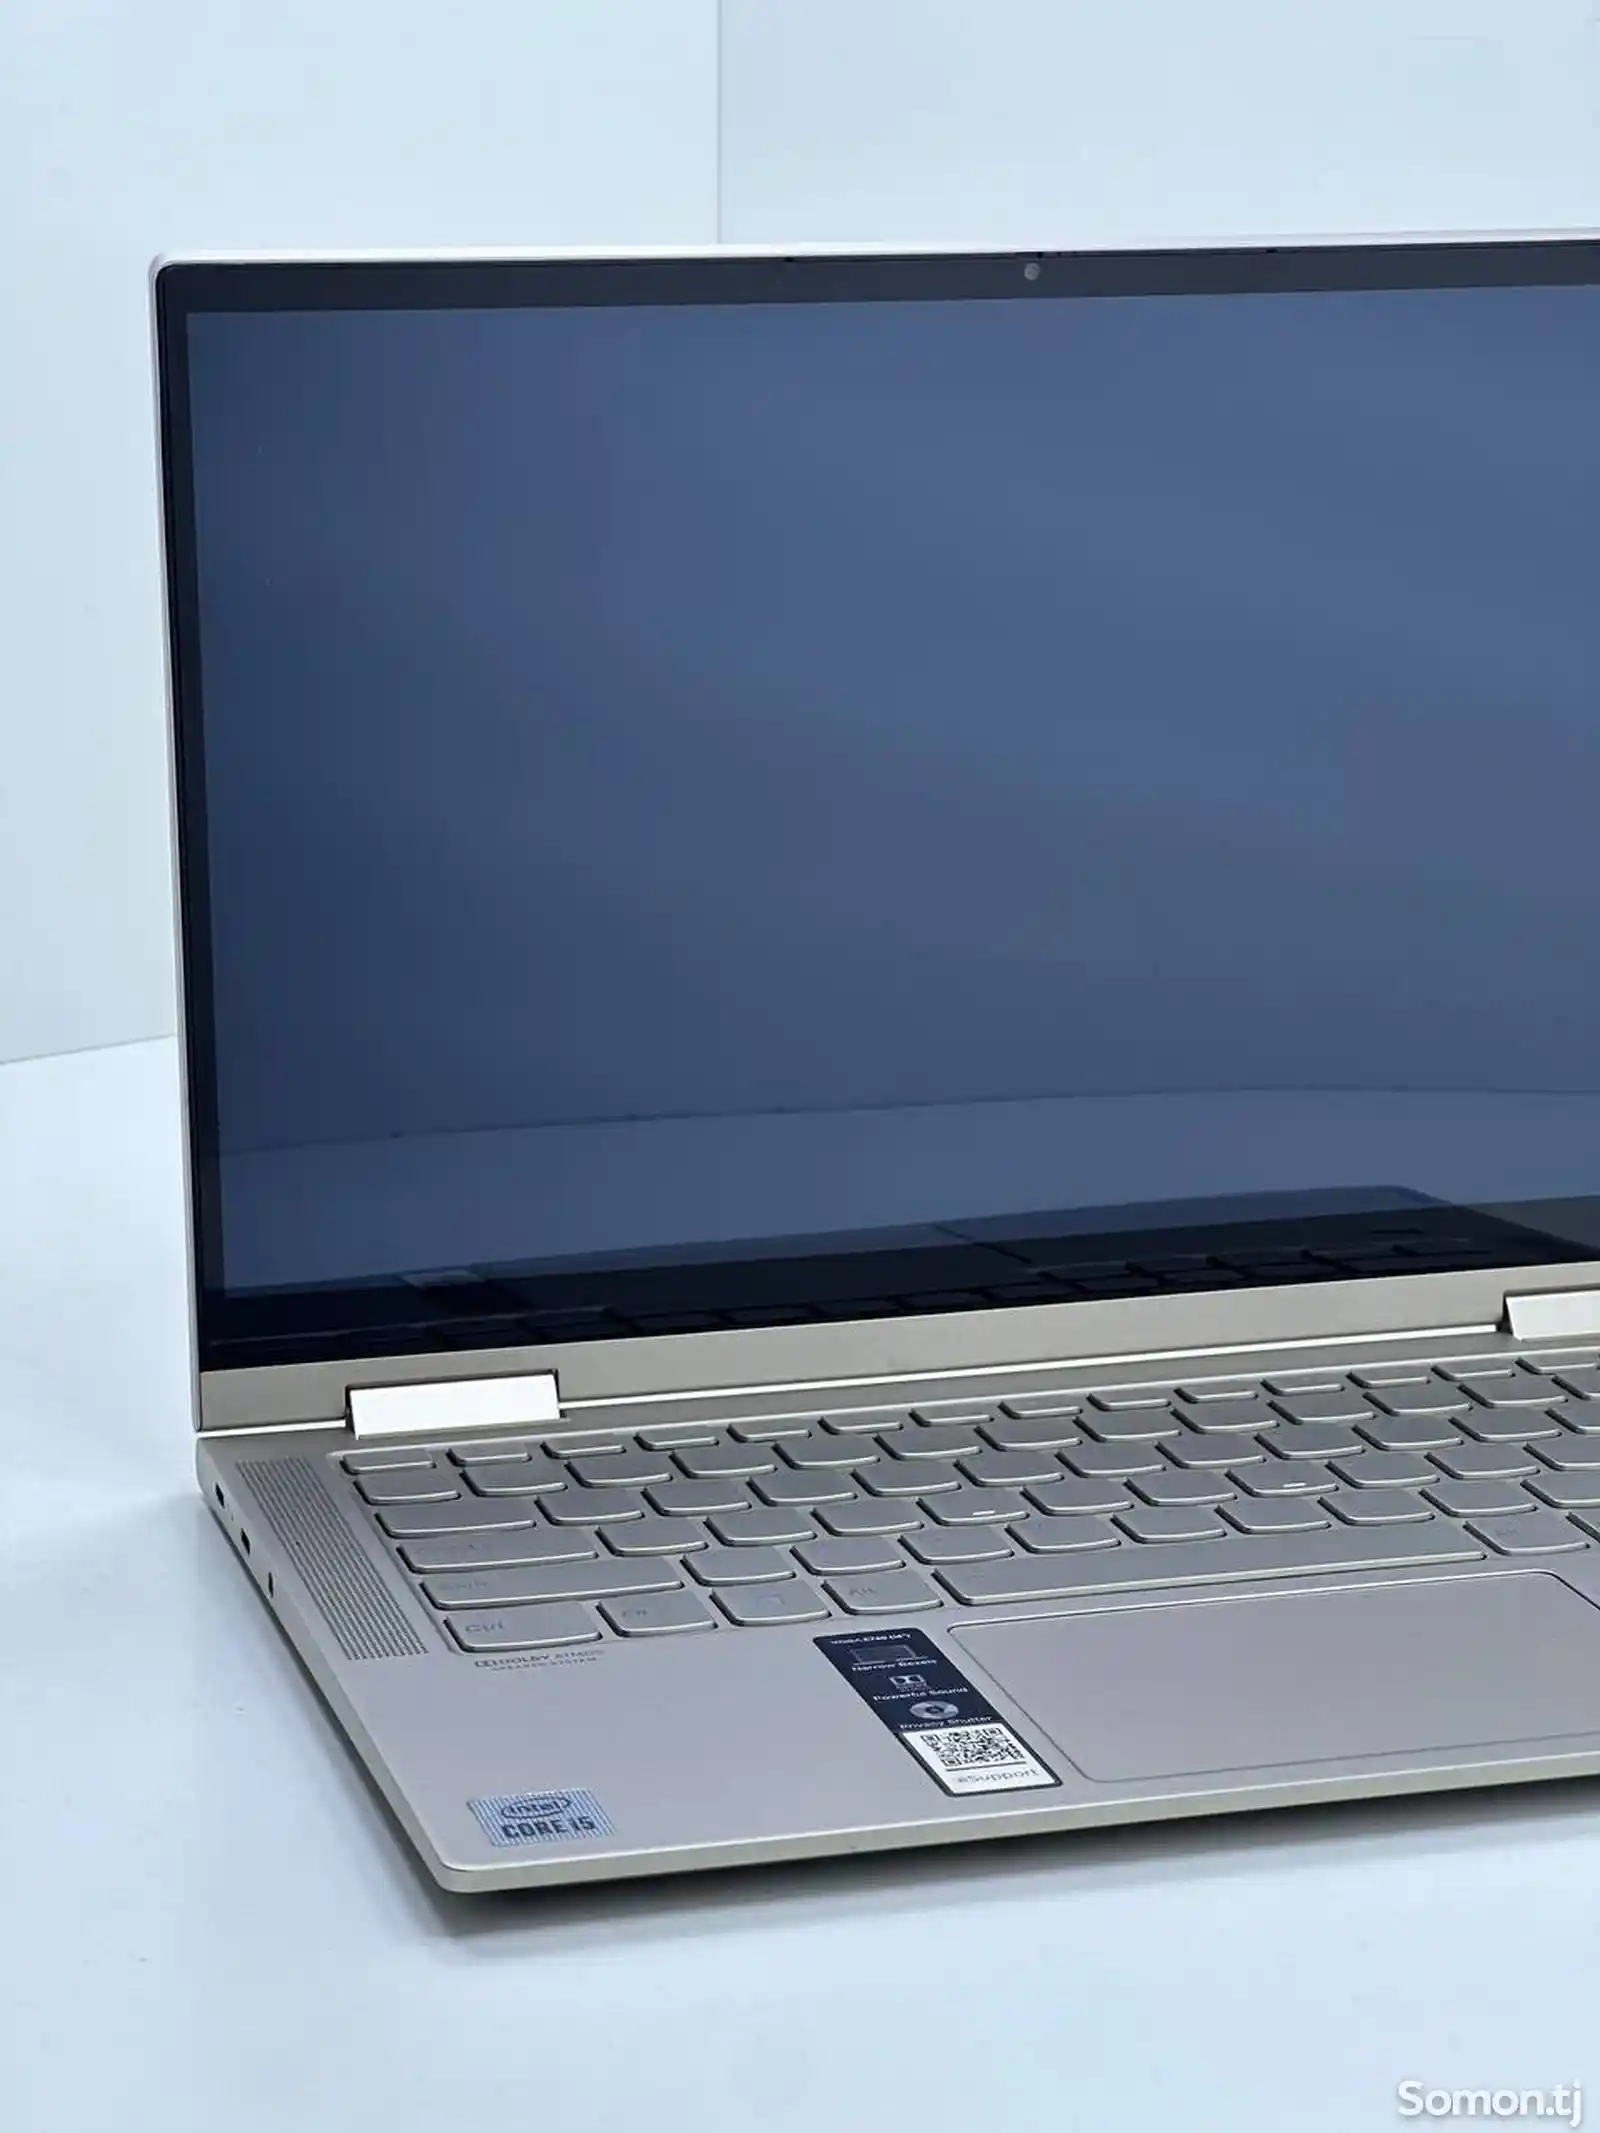 Ноутбук Lenovo Yoga i5-10/8gb ddr4/256gb ssd m2/x360 touchscreen-9